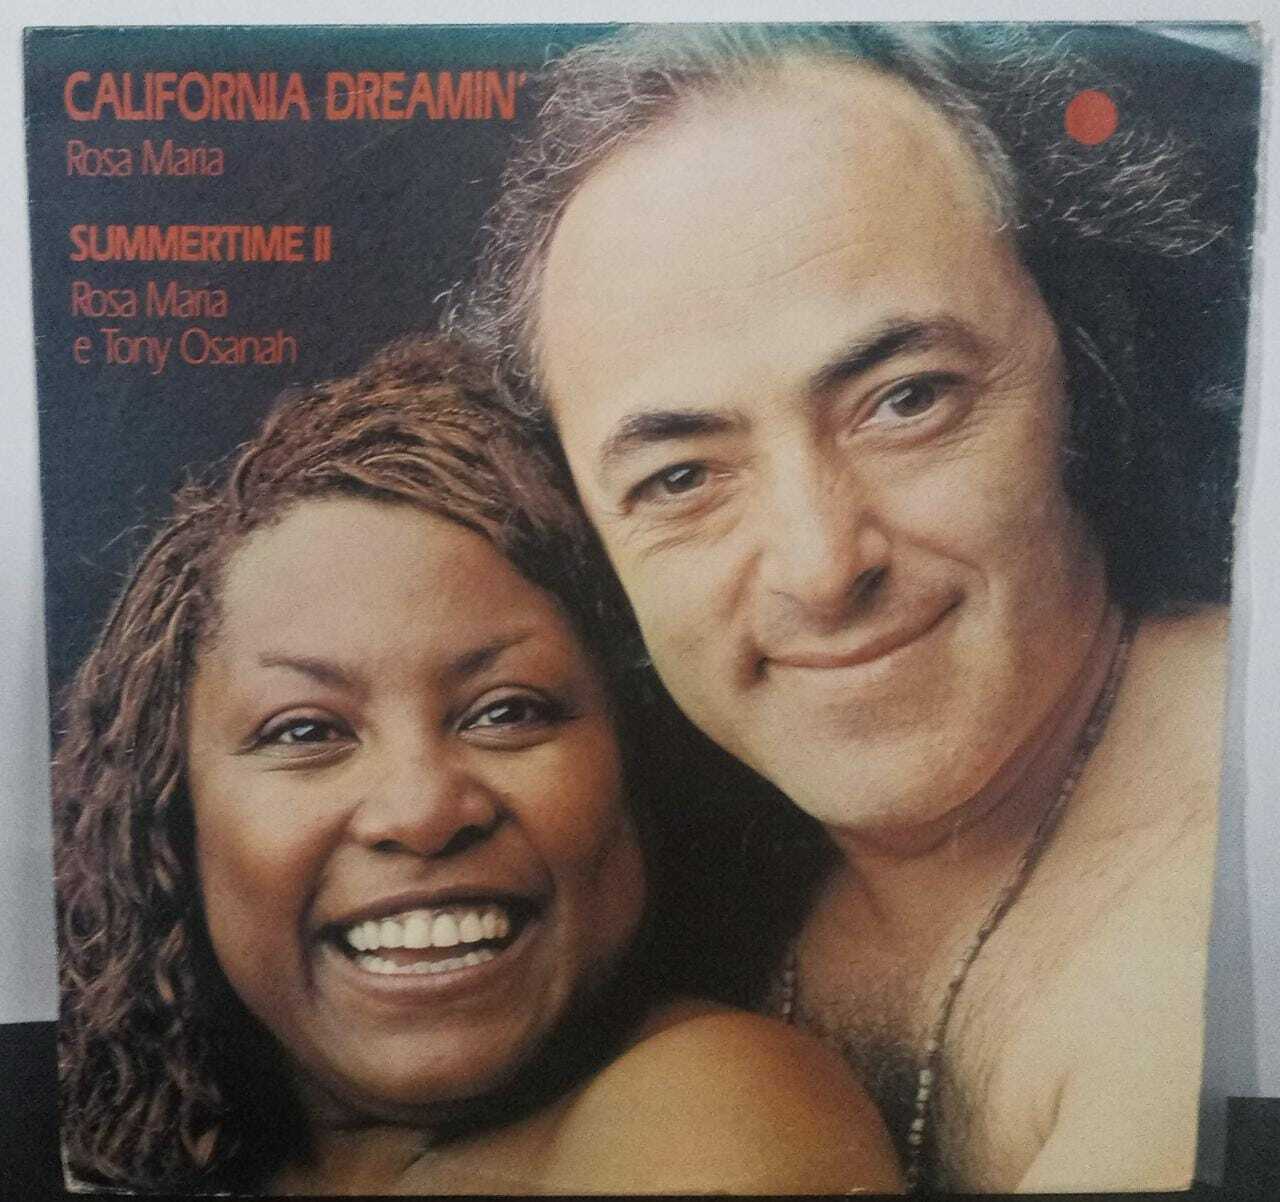 VINIL - Rosa Maria e Tony Osanah - California Dreamin / Summertime II